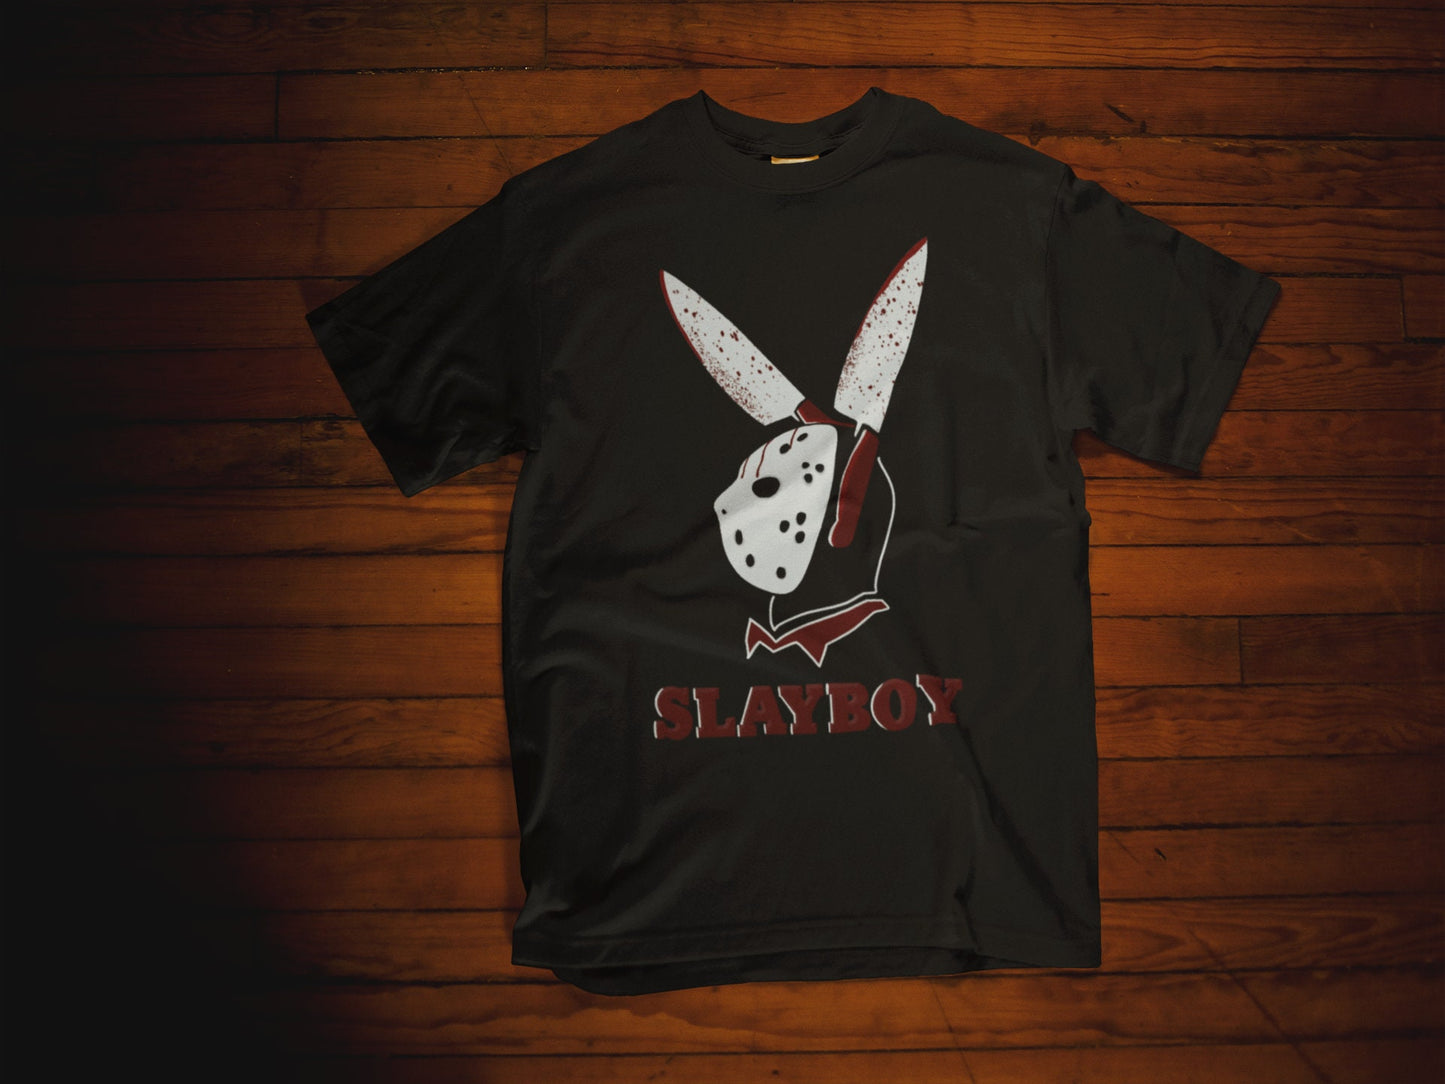 SLAYBOY Jason Vorhees Funny DTG Printed T Shirt